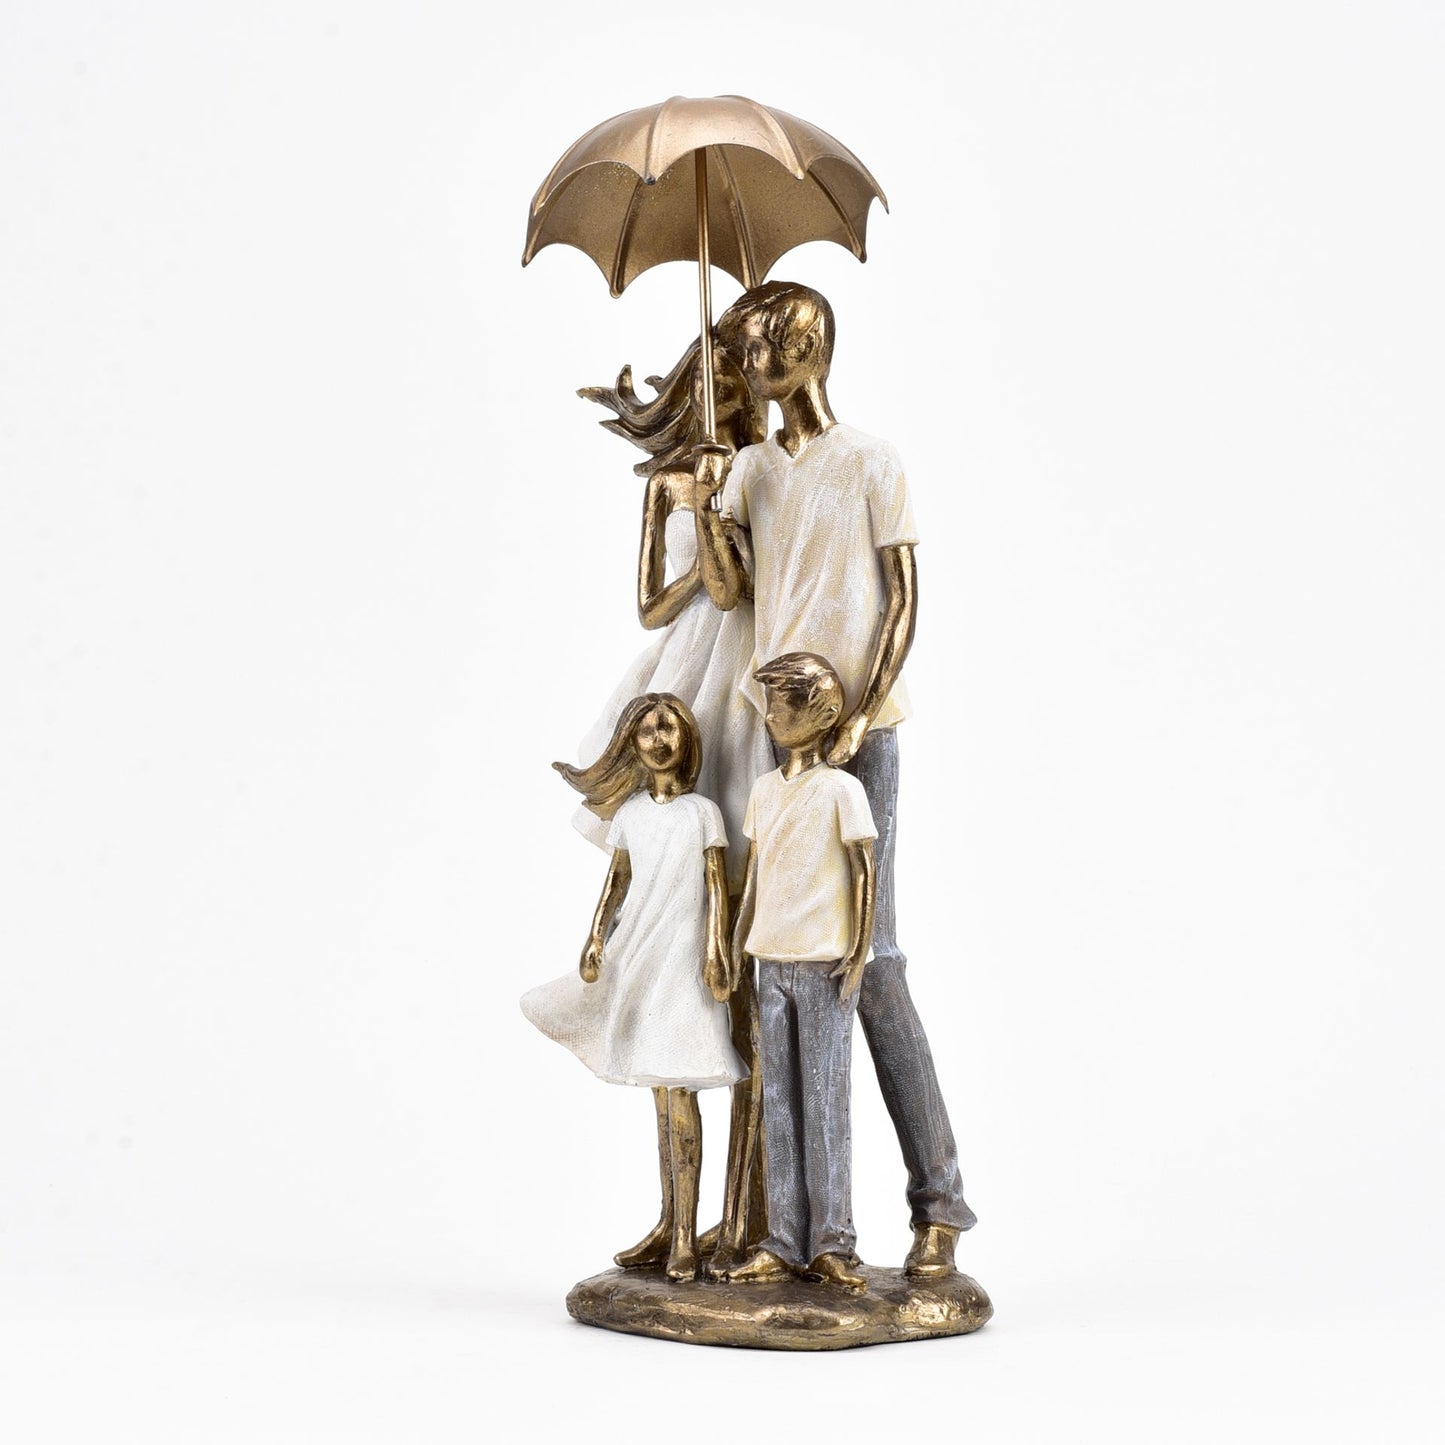 Juliana Rainy Day Collection Family Of 4 Under Umbrella Figurine